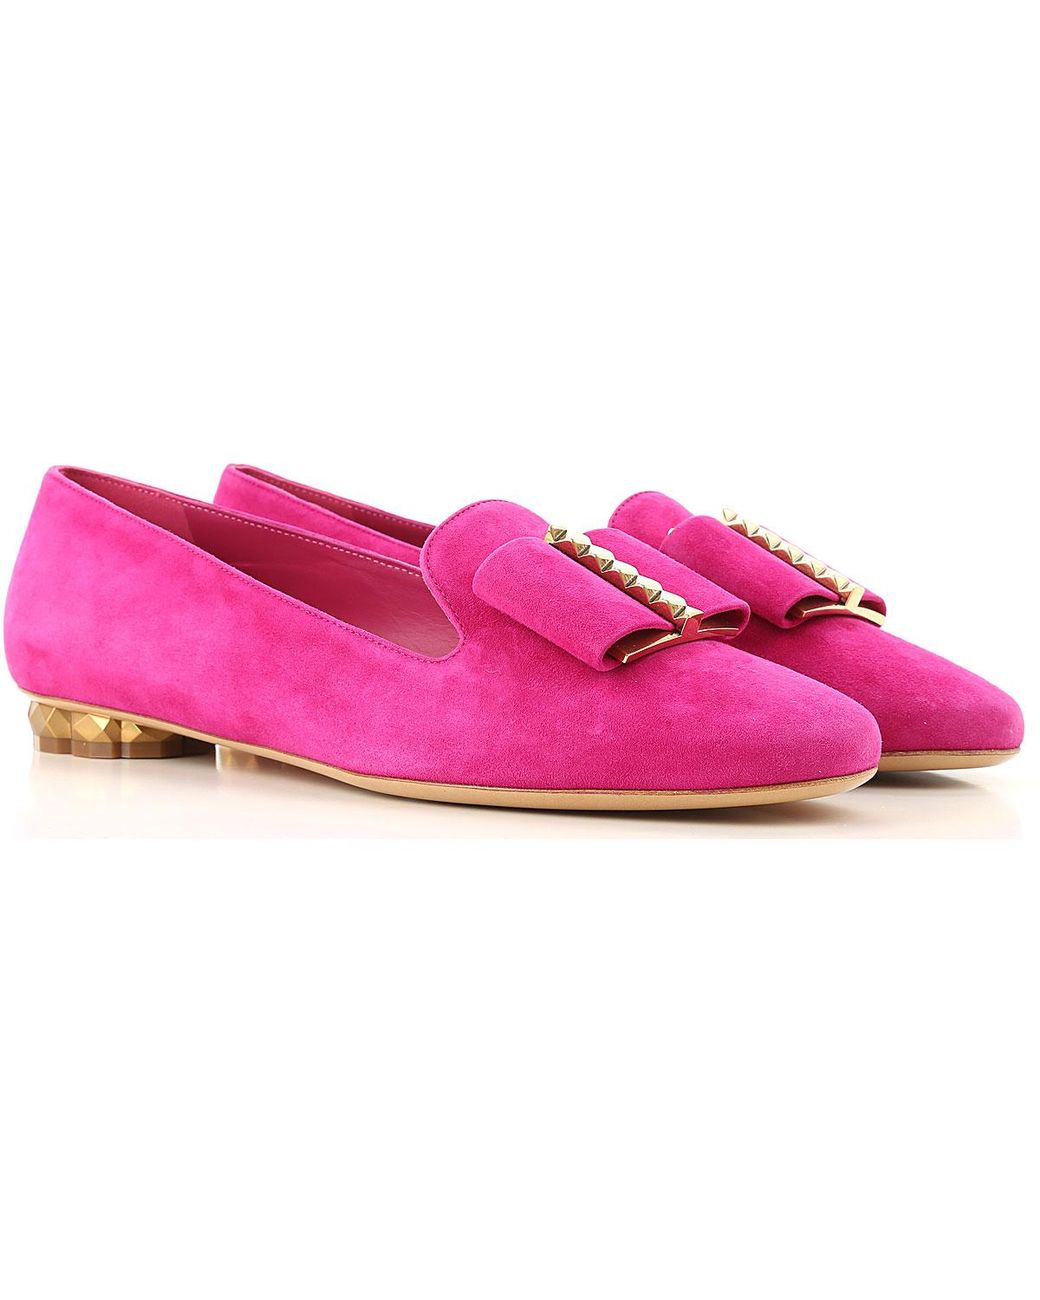 Ferragamo Leather Loafers For Women in Cerise Purple (Purple) - Save 2% ...